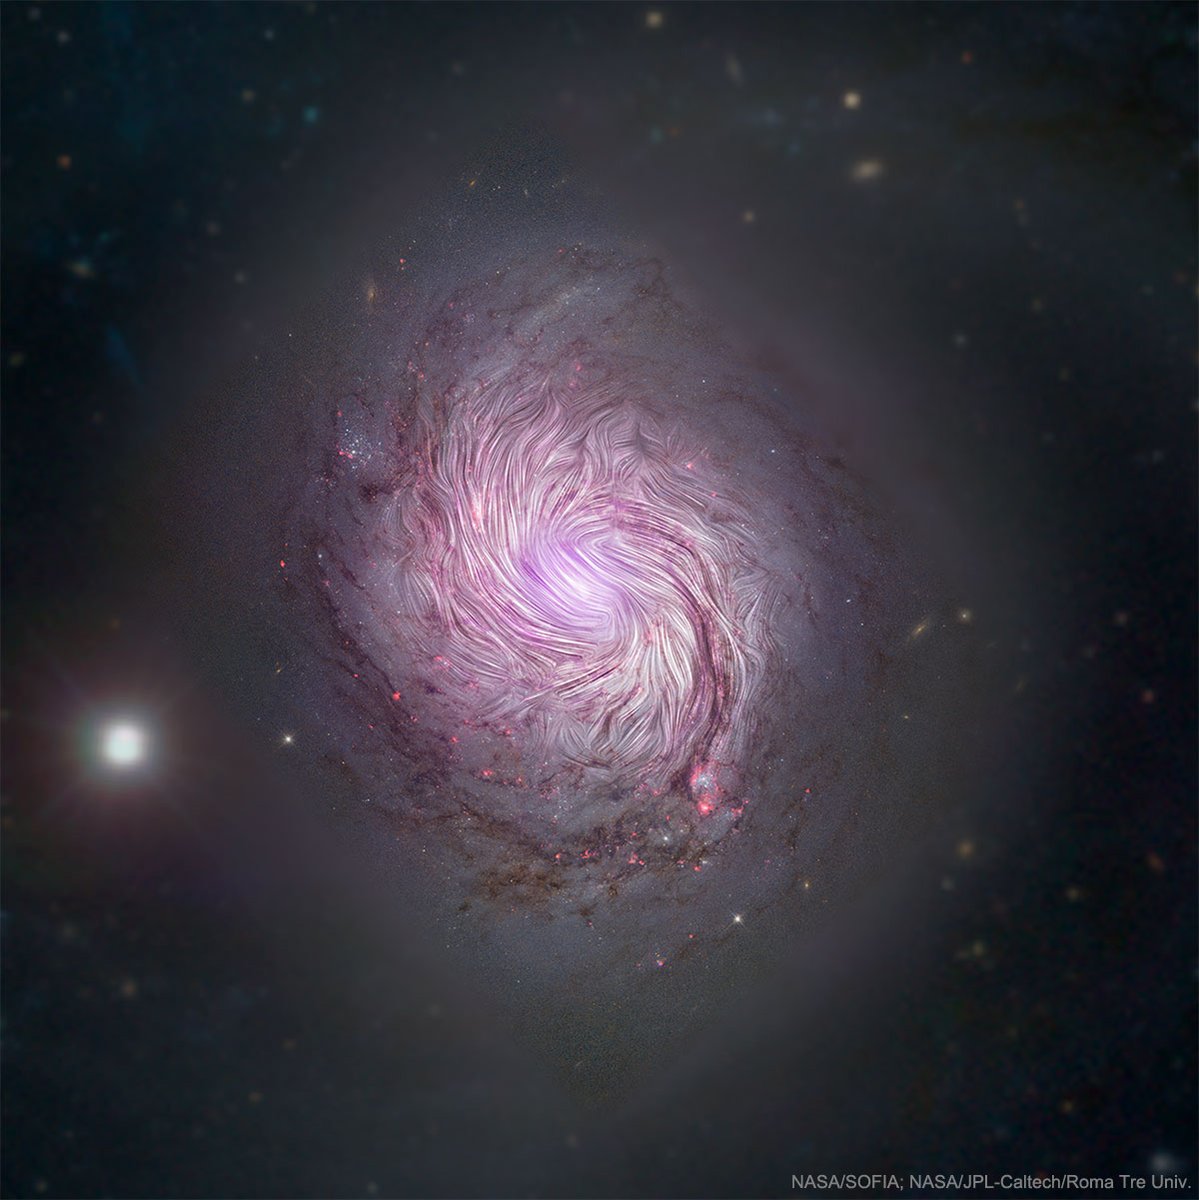 Space photo moment - The Magnetic Fields of Spiral Galaxy M77 by NASA, SOFIA, HAWC+; JPL-Caltech, Roma Tre. U.; ESA, Hubble, NuSTAR, SDSS ( https://apod.nasa.gov/apod/ap191216.html)